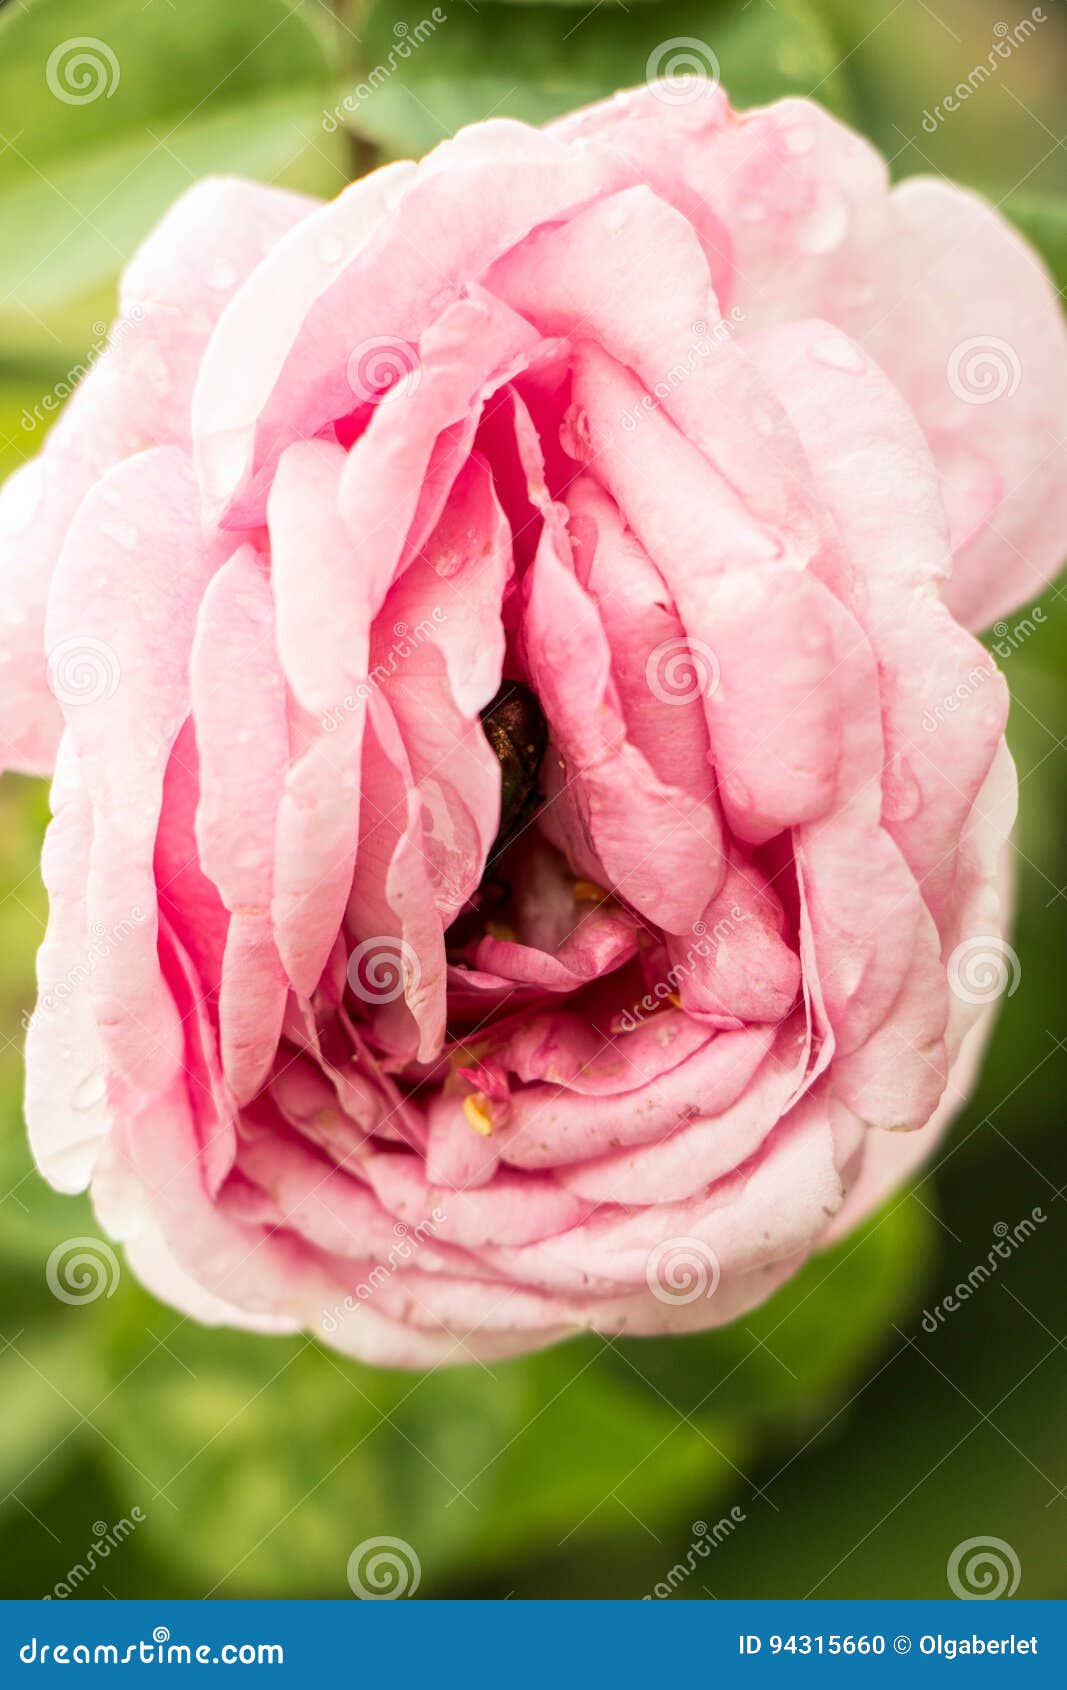 441 Pink Clitoris Stock Photos picture